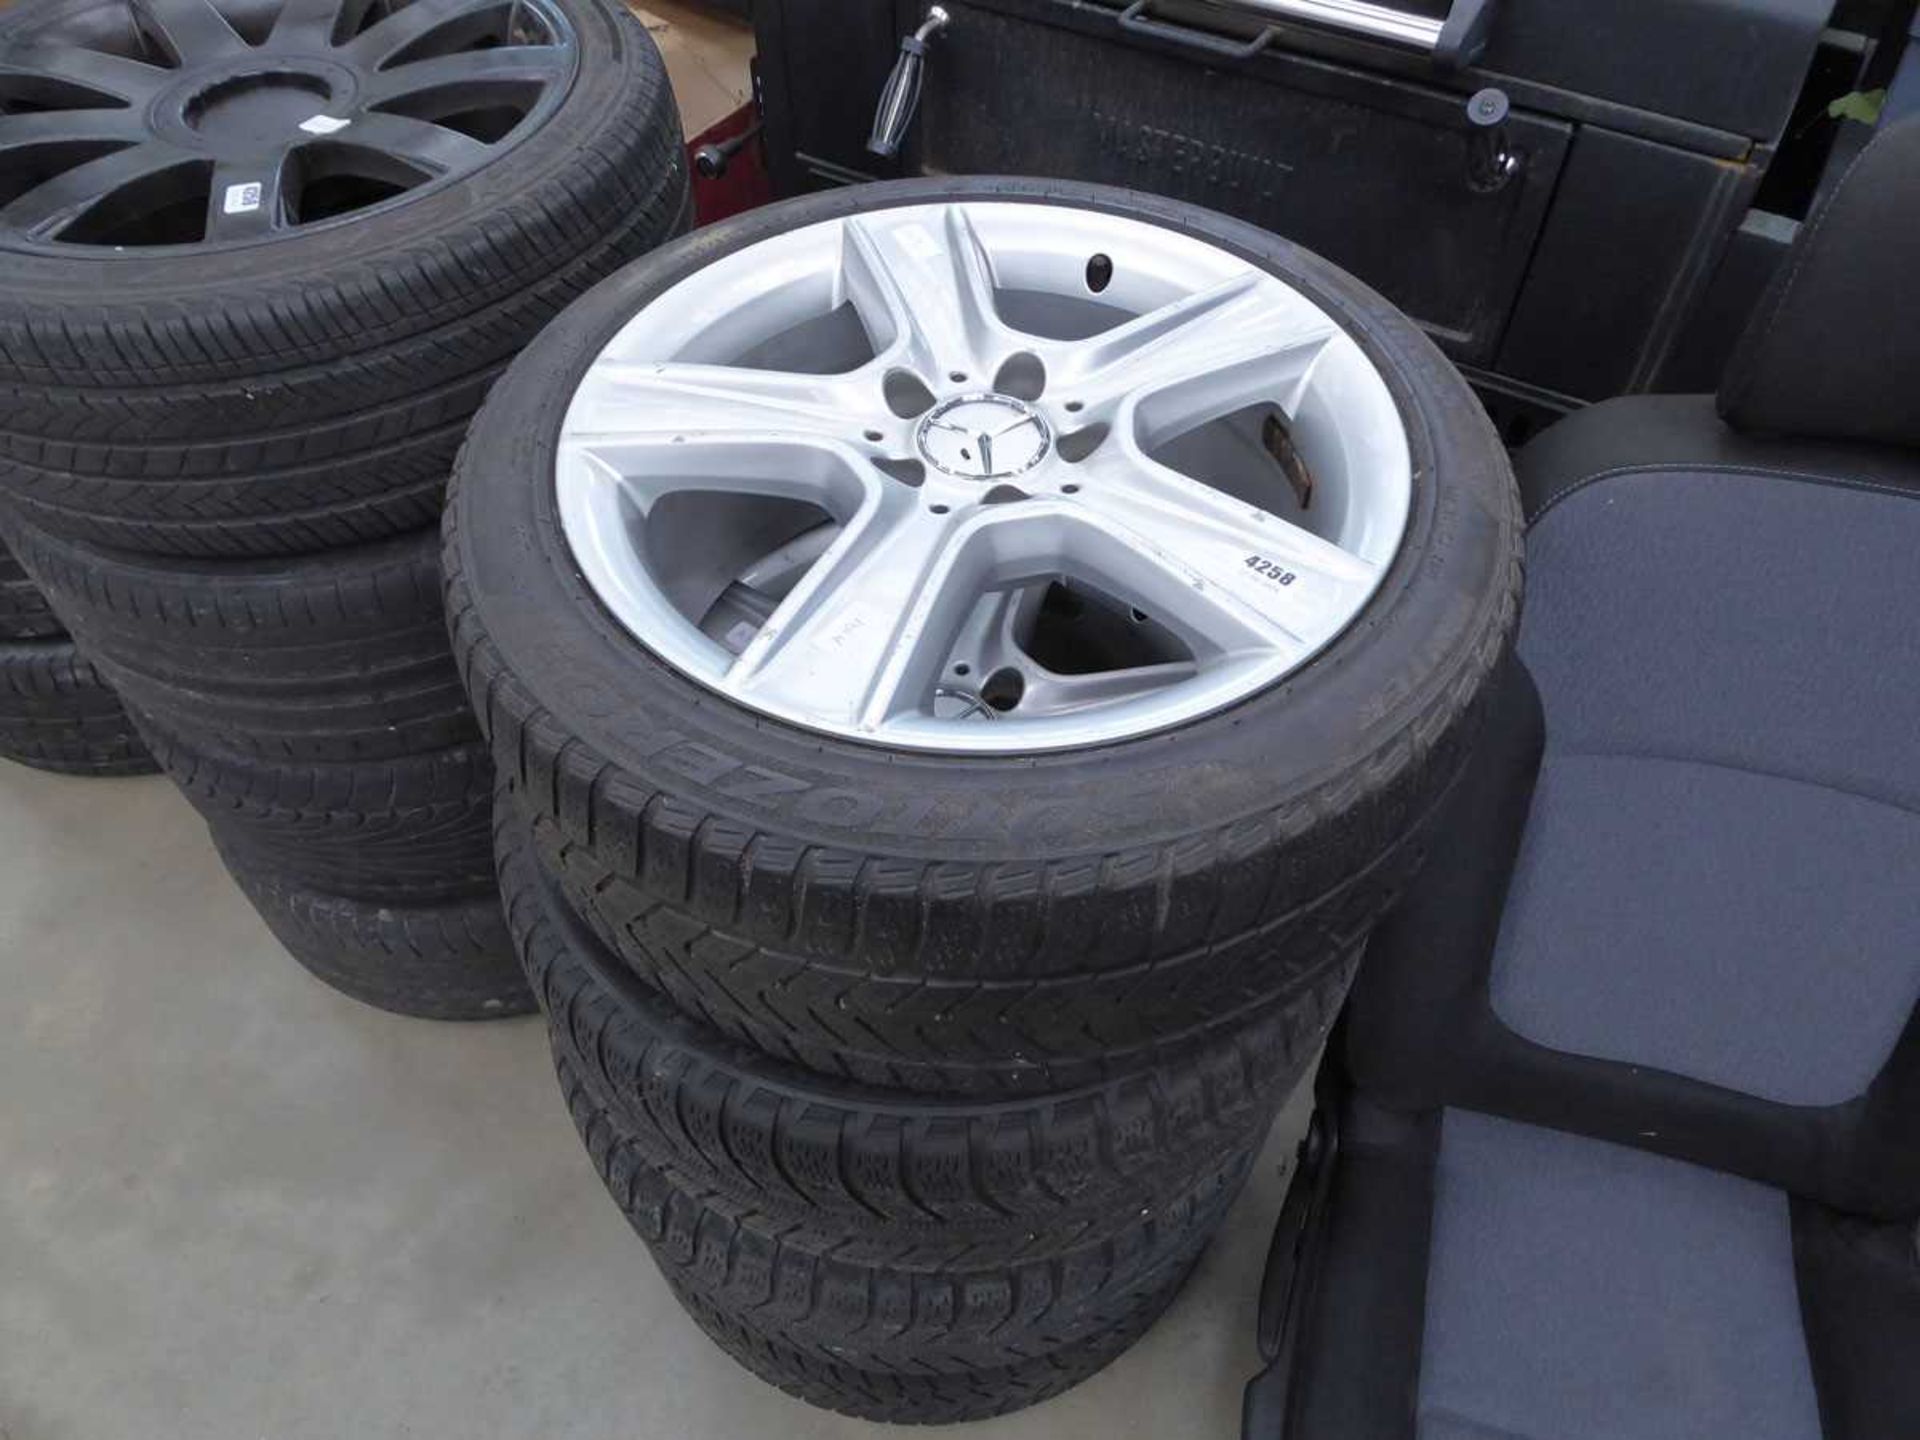 4 x Mercedes alloy wheels and tyres, size 225x45x17